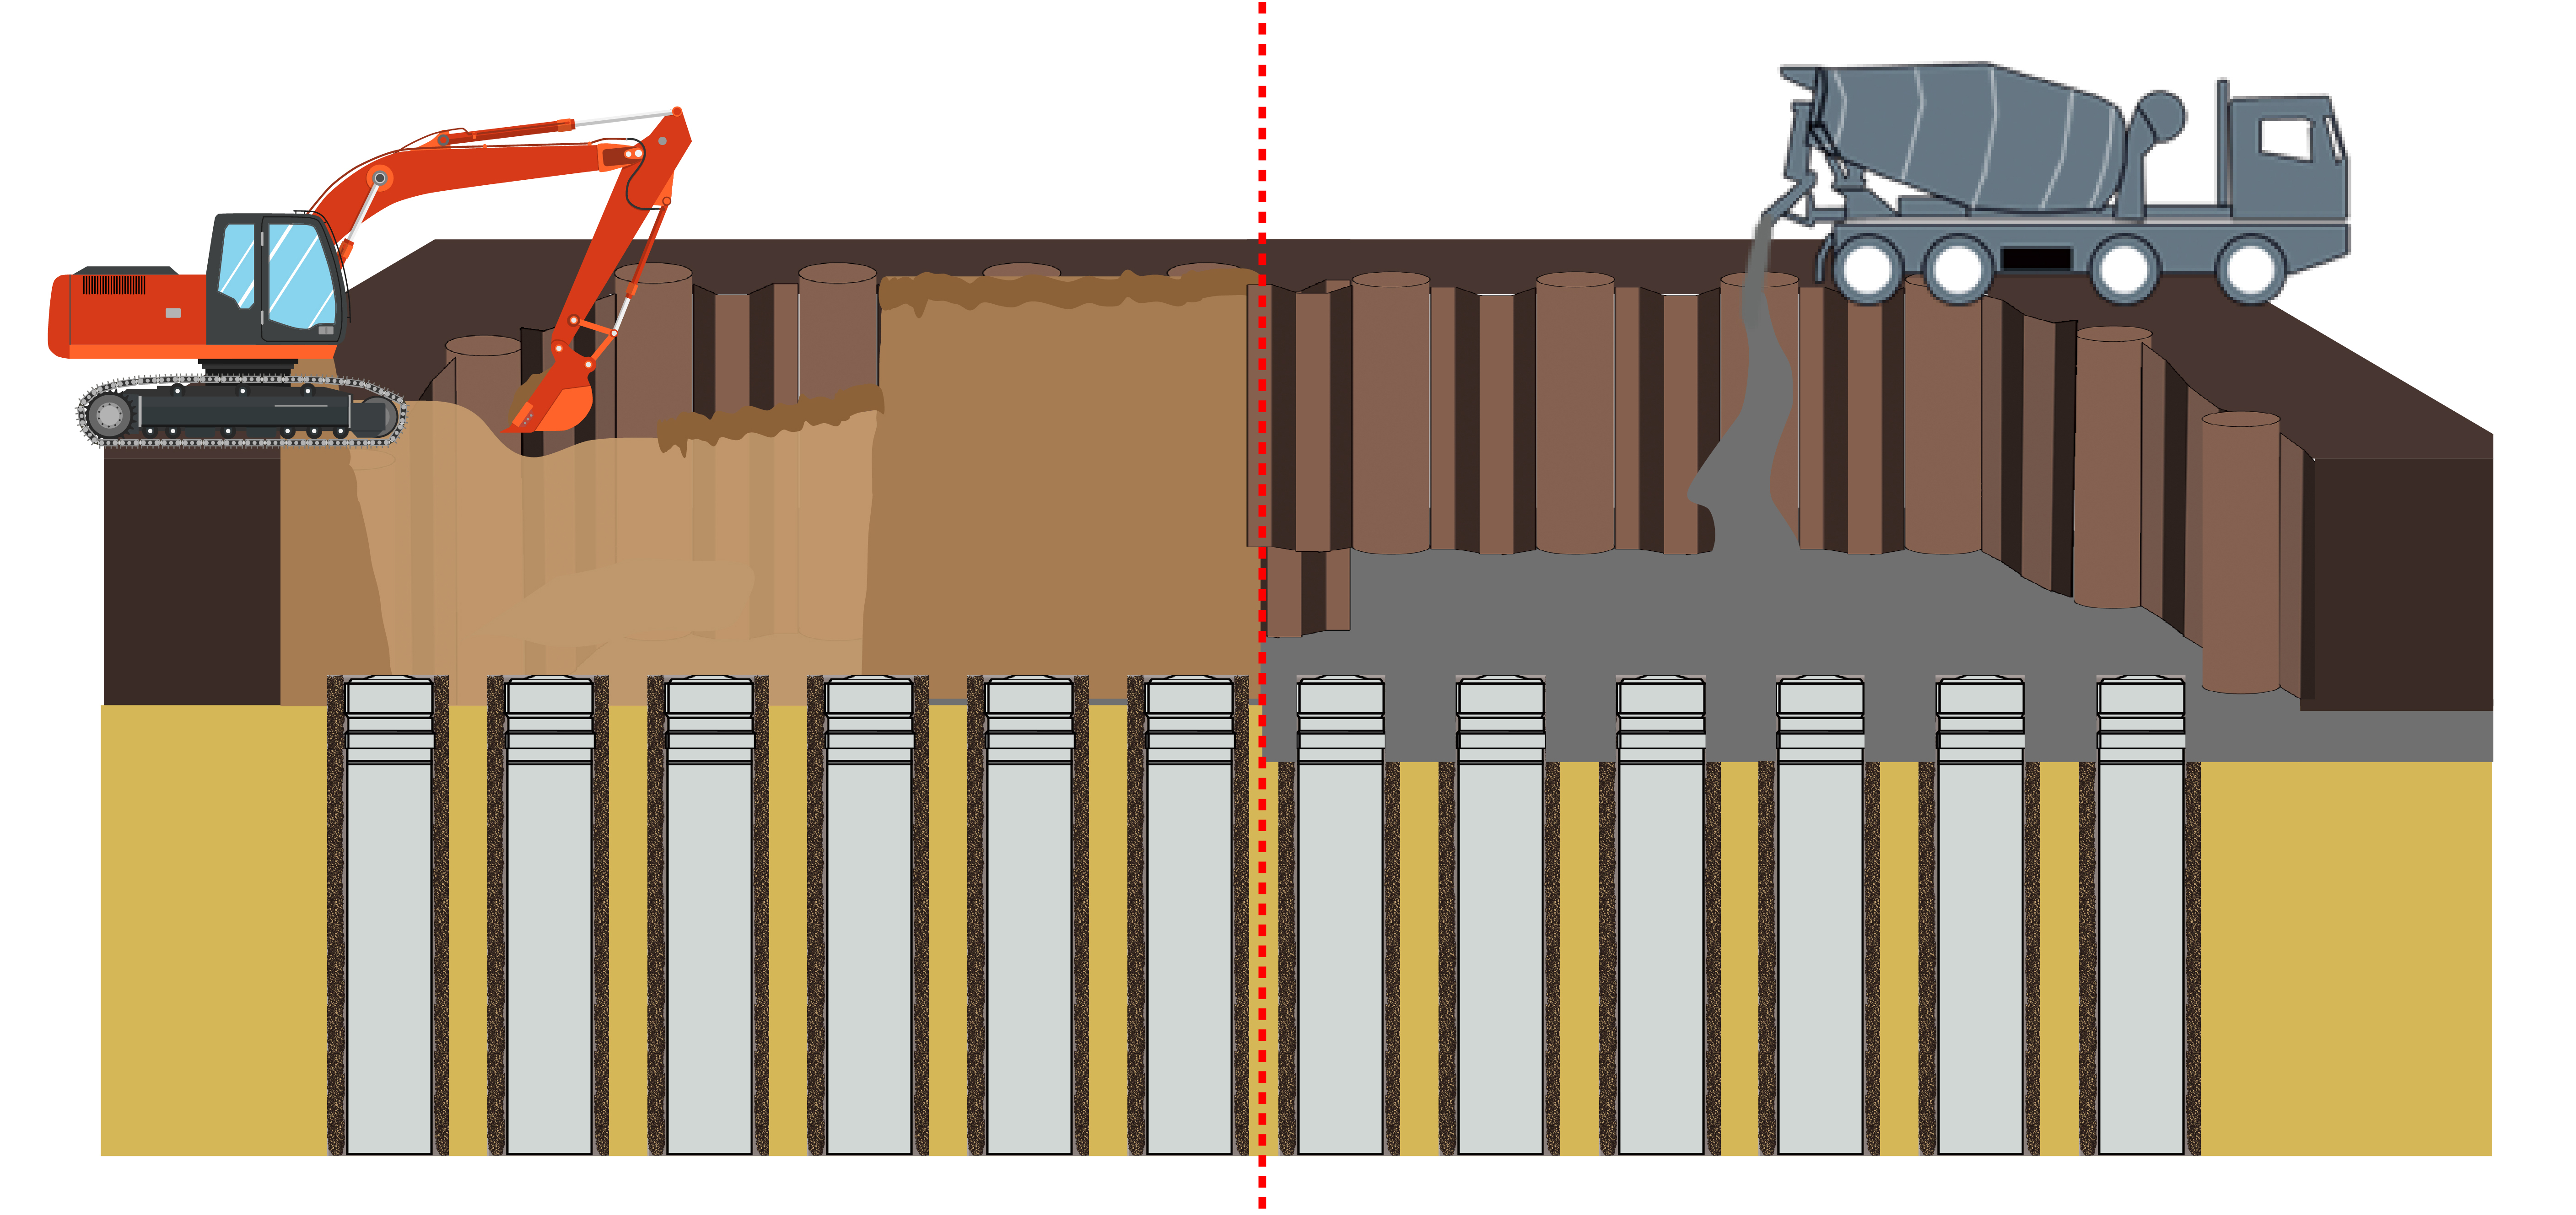 Dutch method for installation pre-fab concrete piles below excavation levels: the vibro combination 